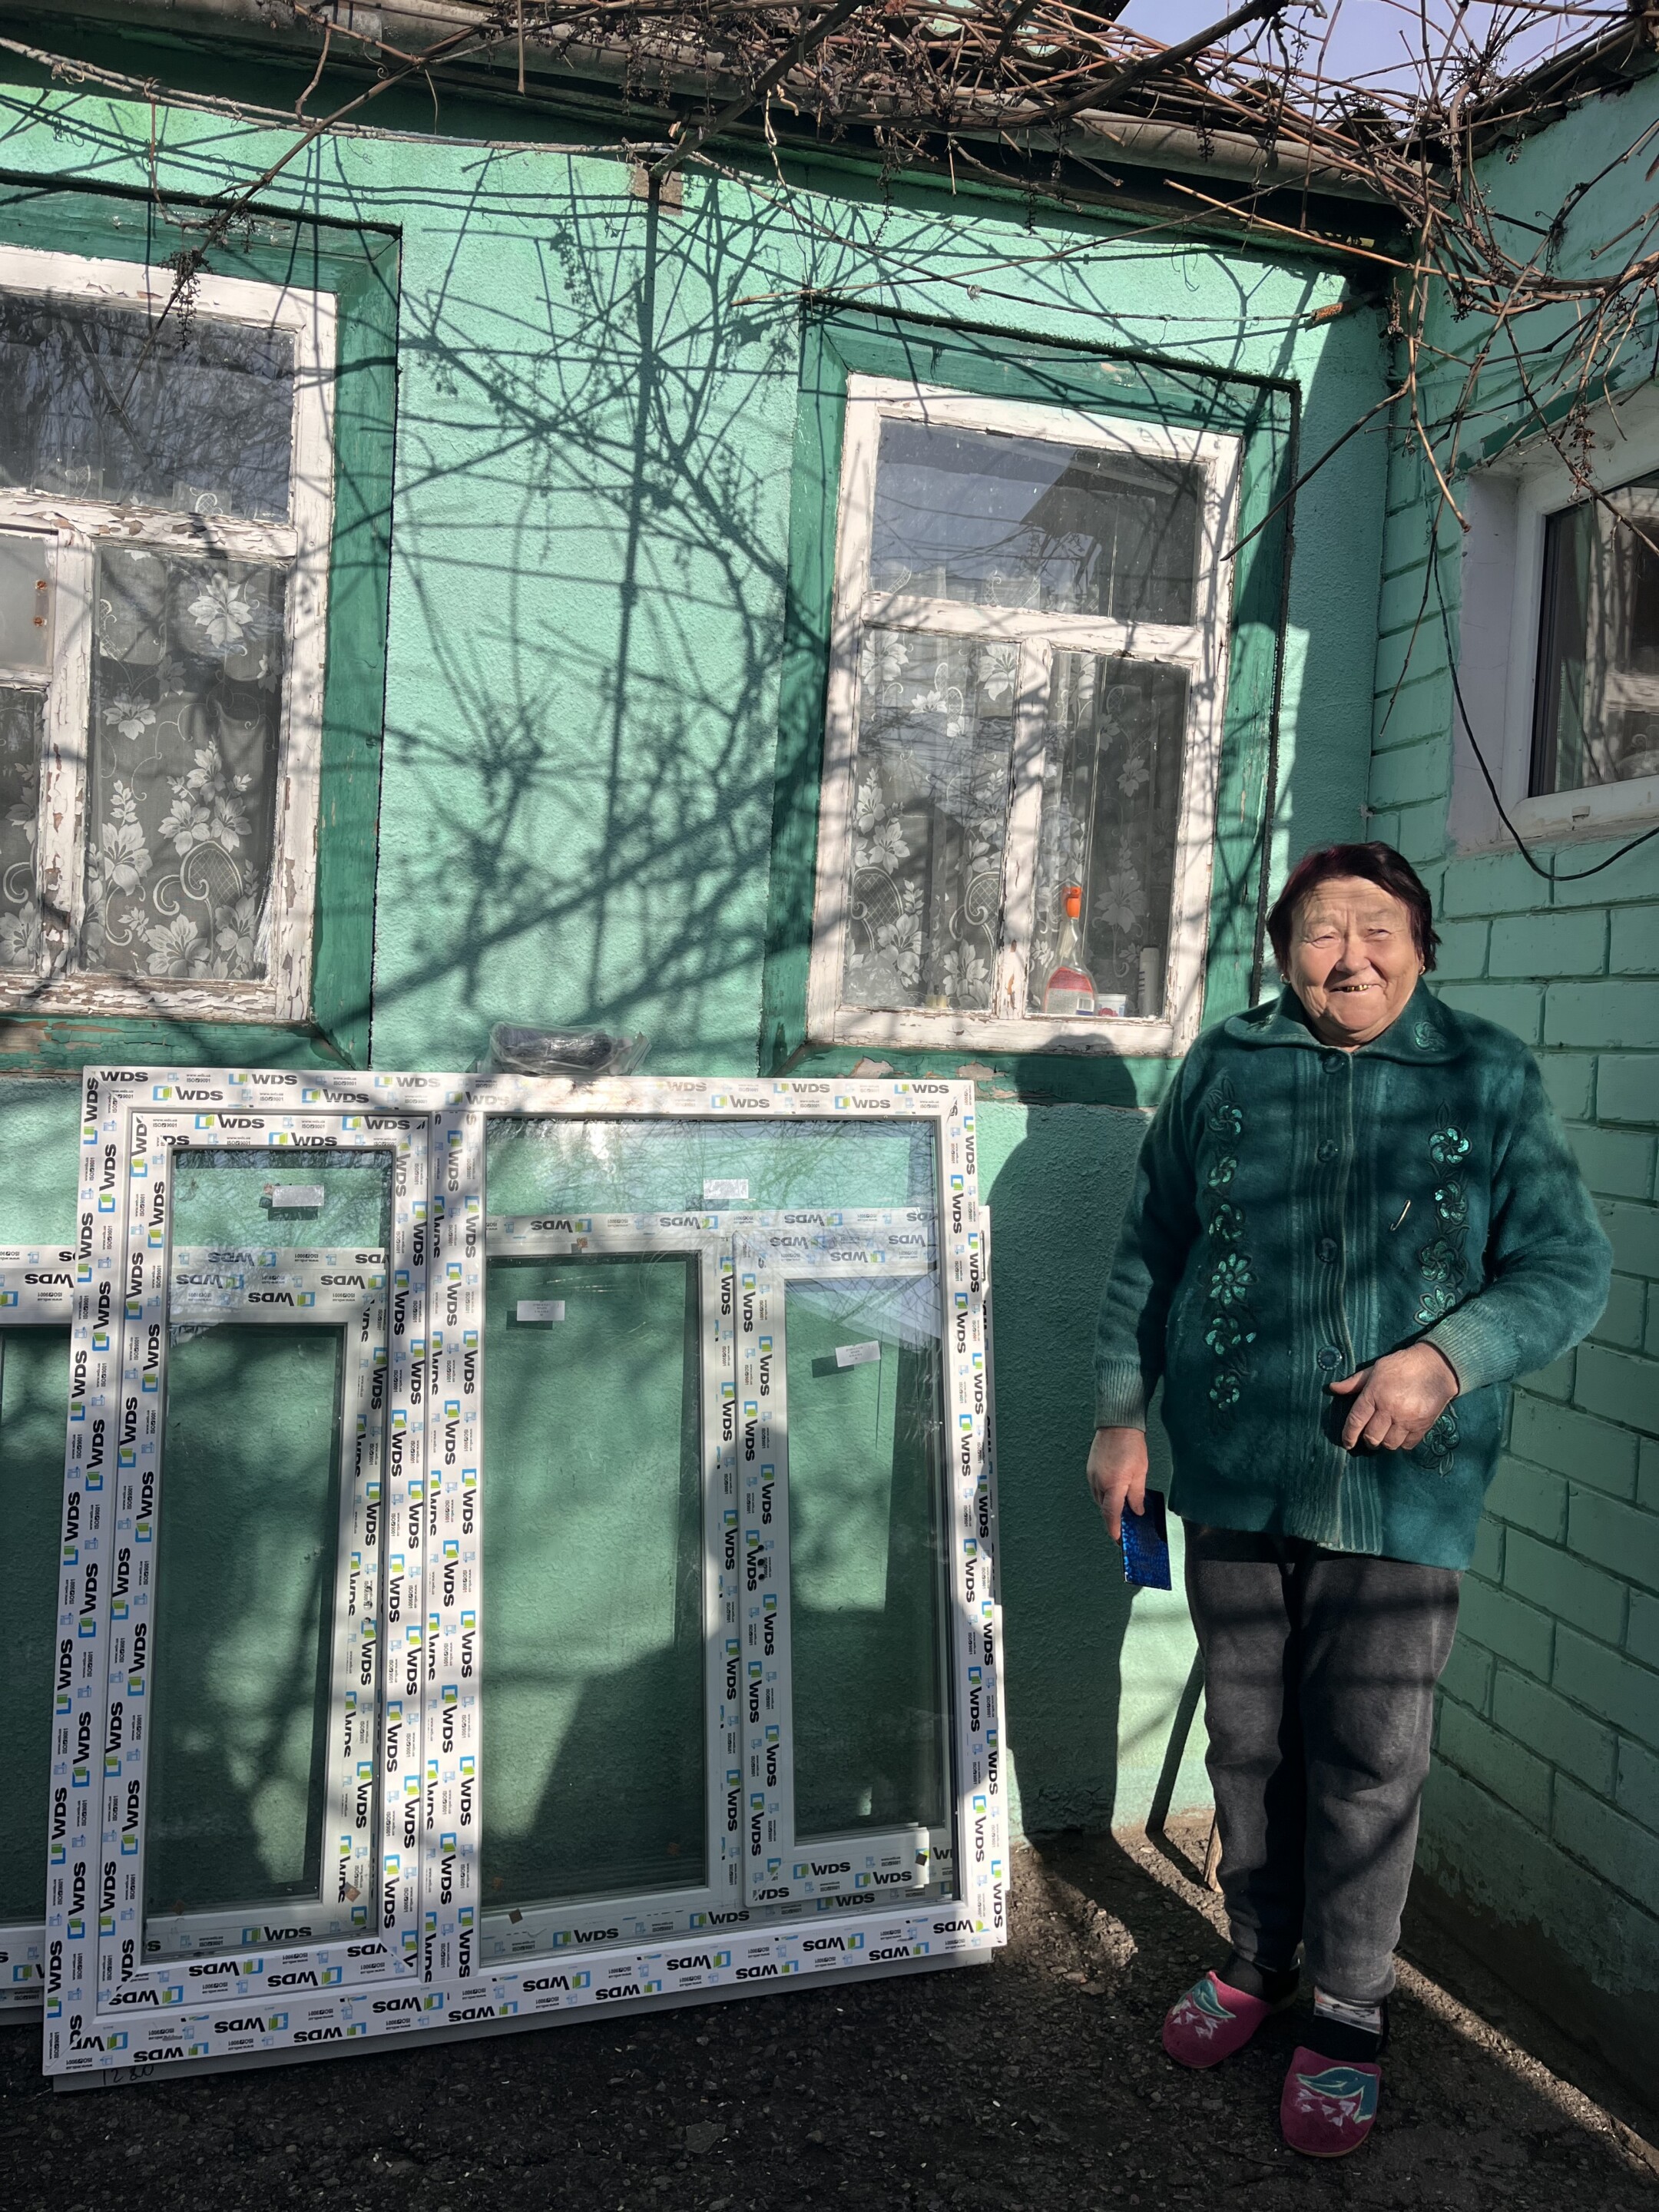 window replacement by KHARPP in ukraine